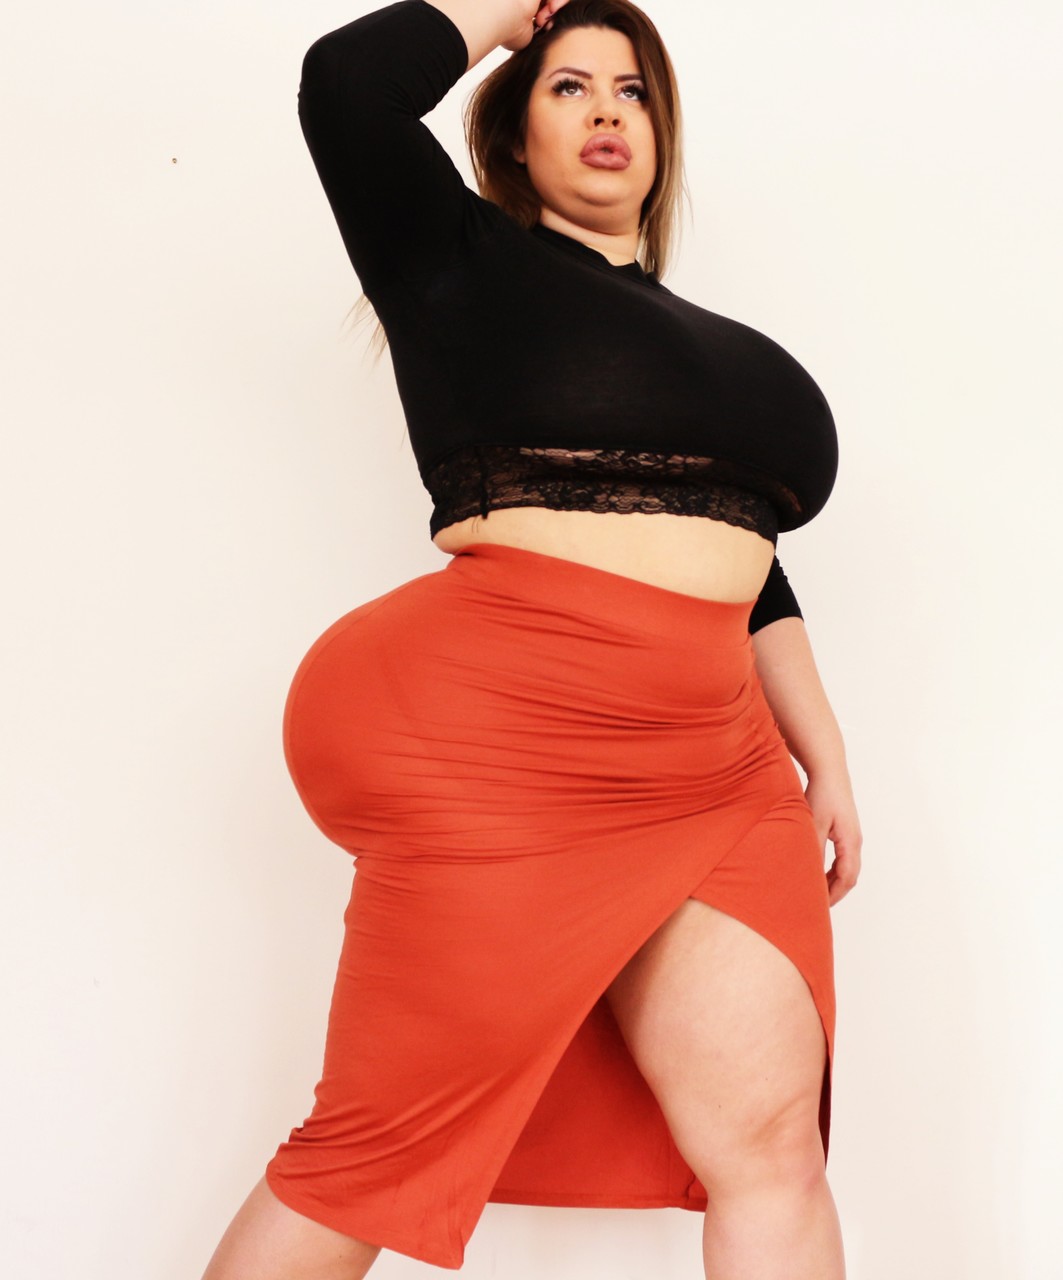 Stunning MILF fatty Natasha Crown flaunting her very big ass in a tight skirt porn photo #423816656 | Natasha Crown Pics, Natasha Crown, BBW, mobile porn